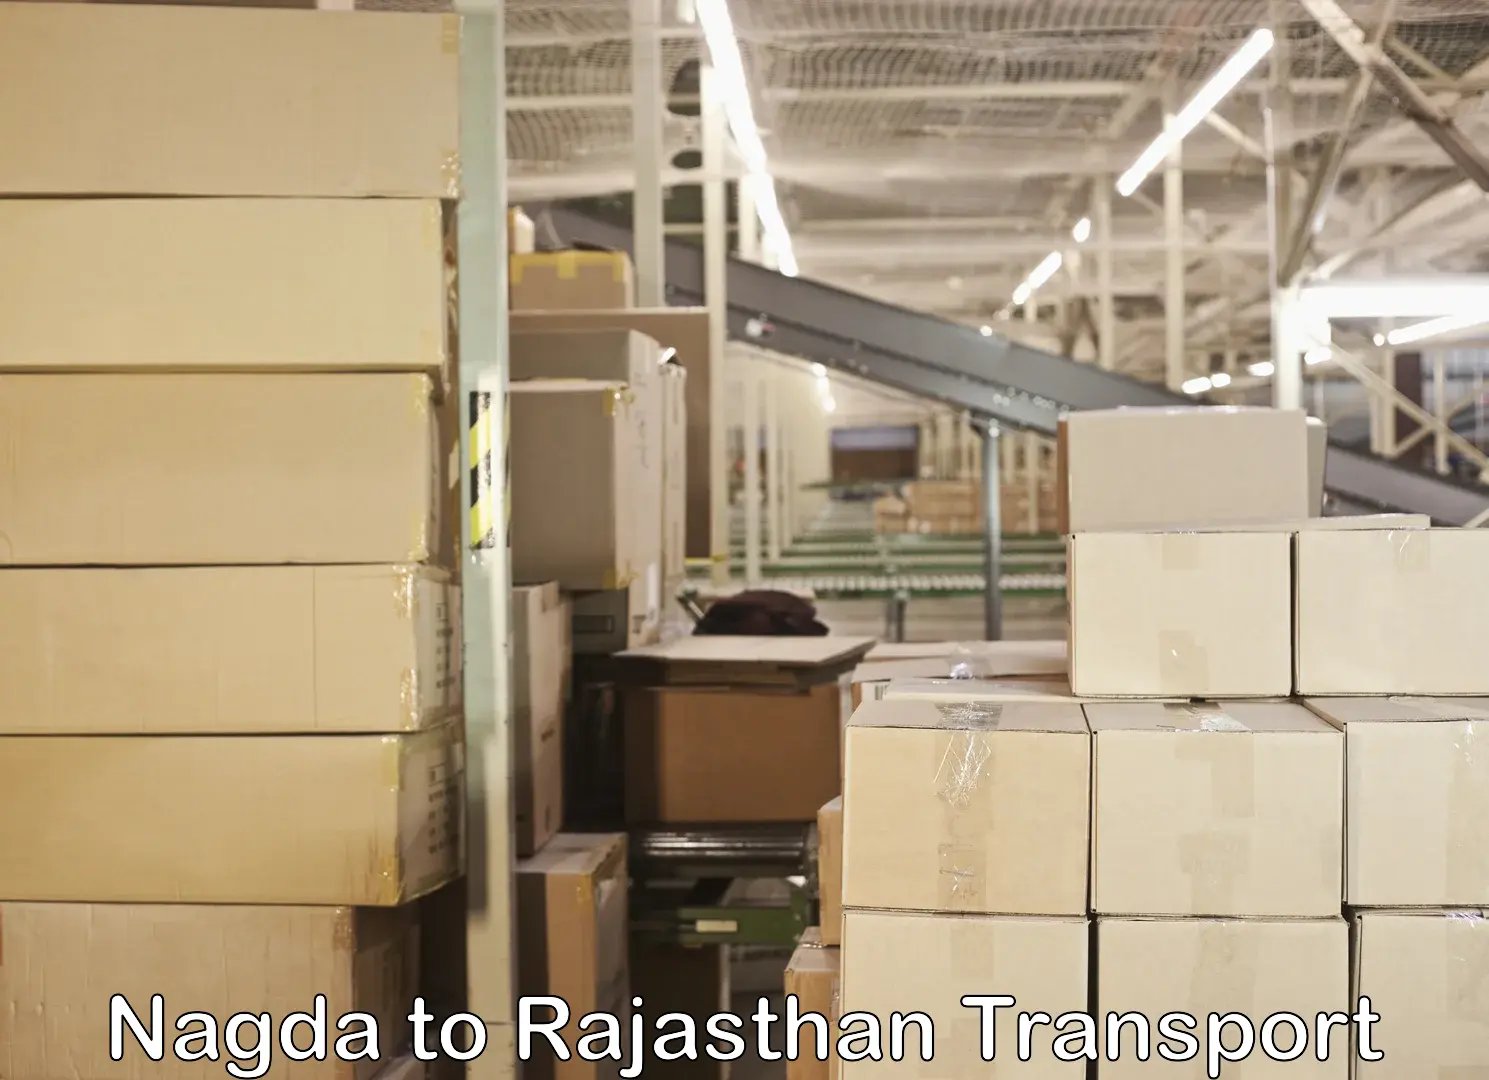 Truck transport companies in India in Nagda to Chittorgarh